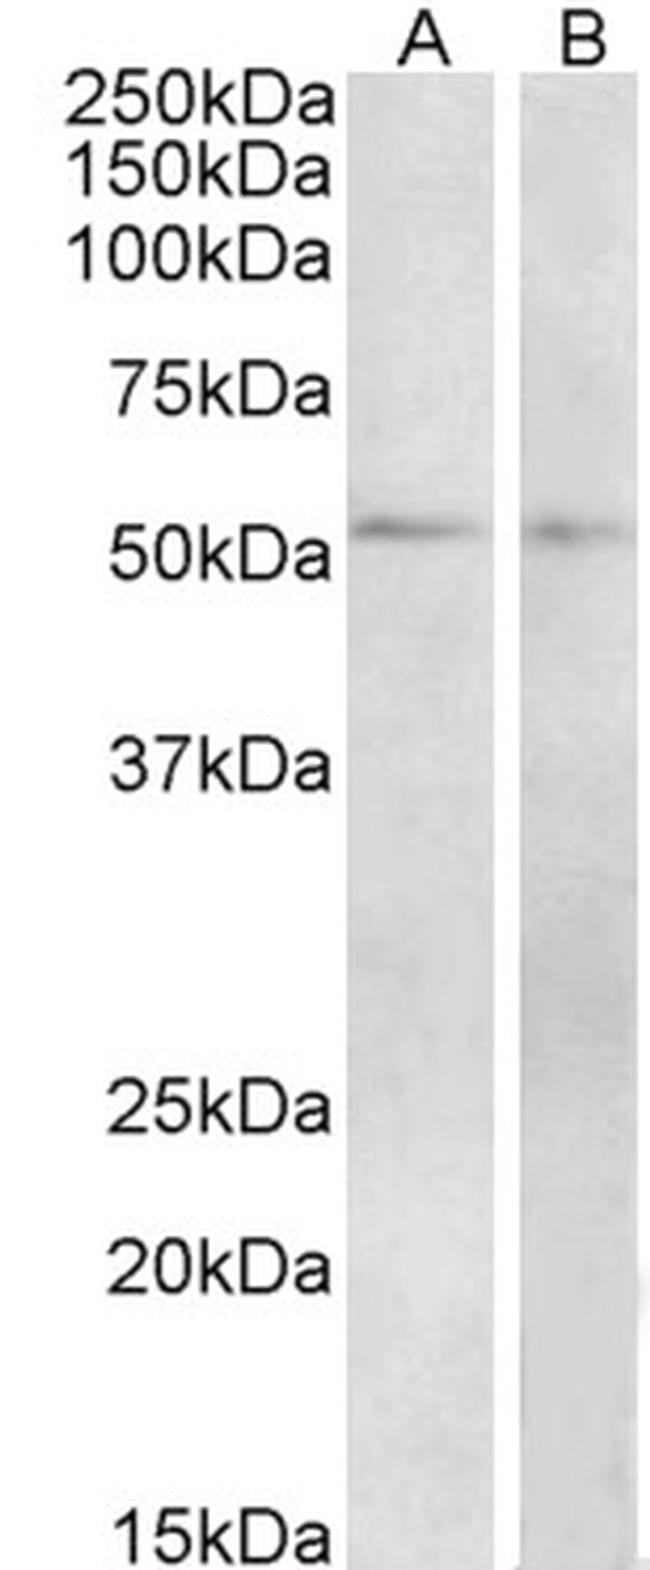 VIPR1 Antibody in Western Blot (WB)